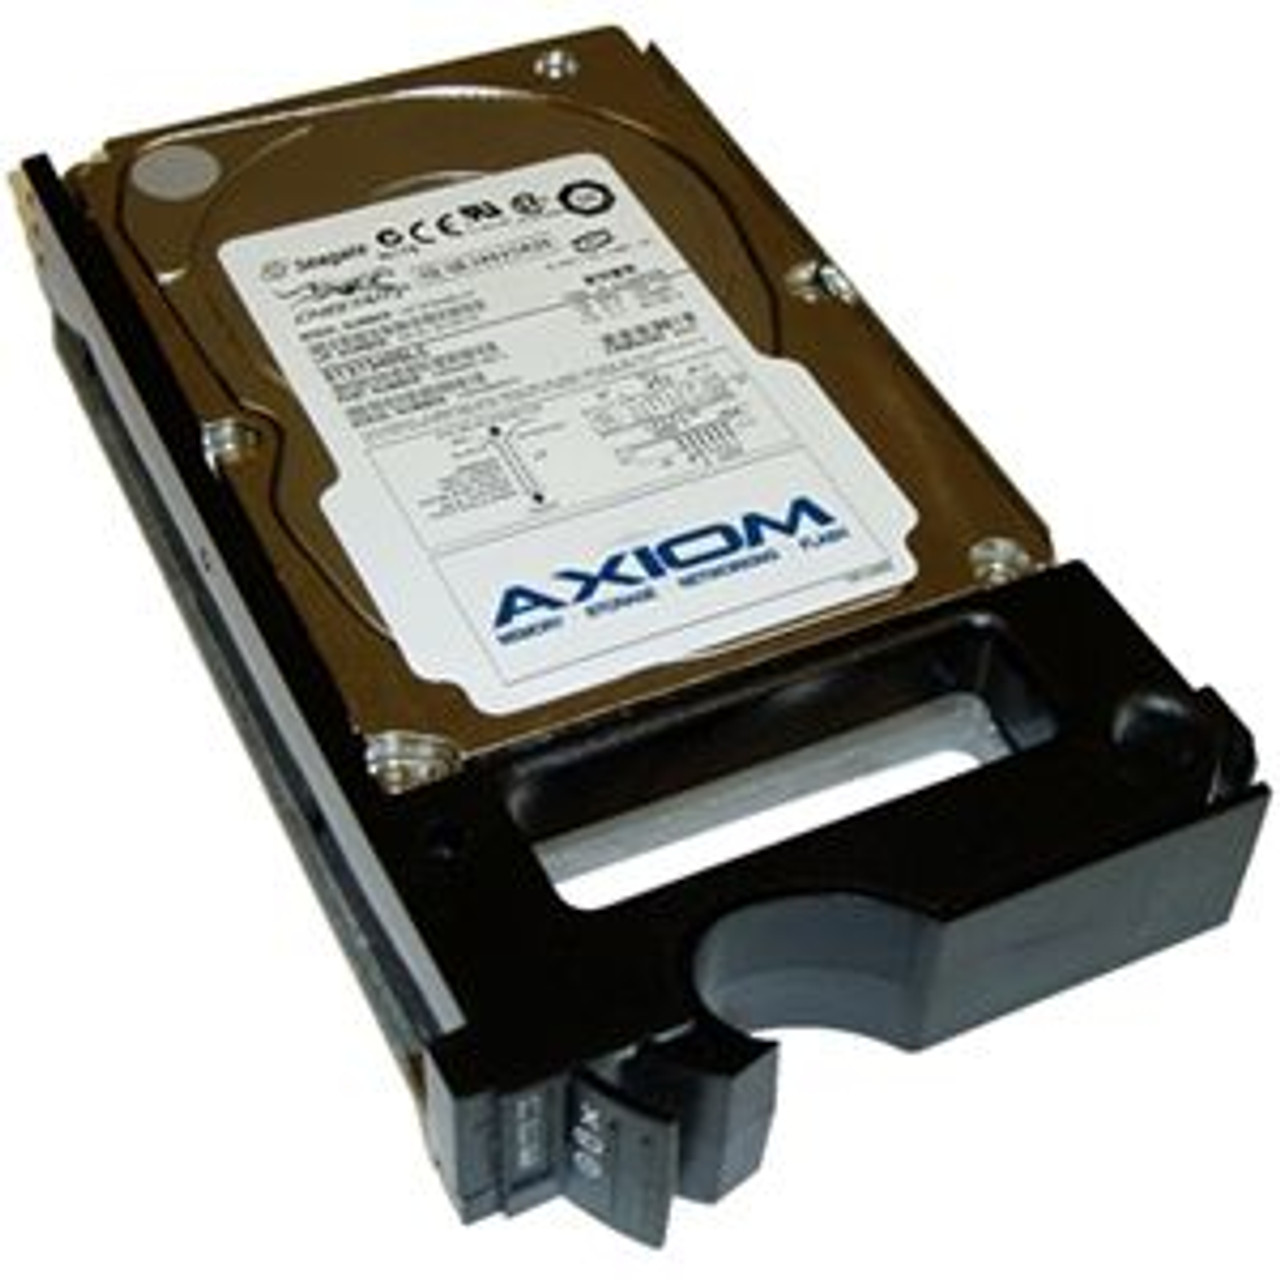 AXD-PE7315A - Axiom 73 GB Internal Hard Drive - SCSI - 15000 rpm - Hot Swappable